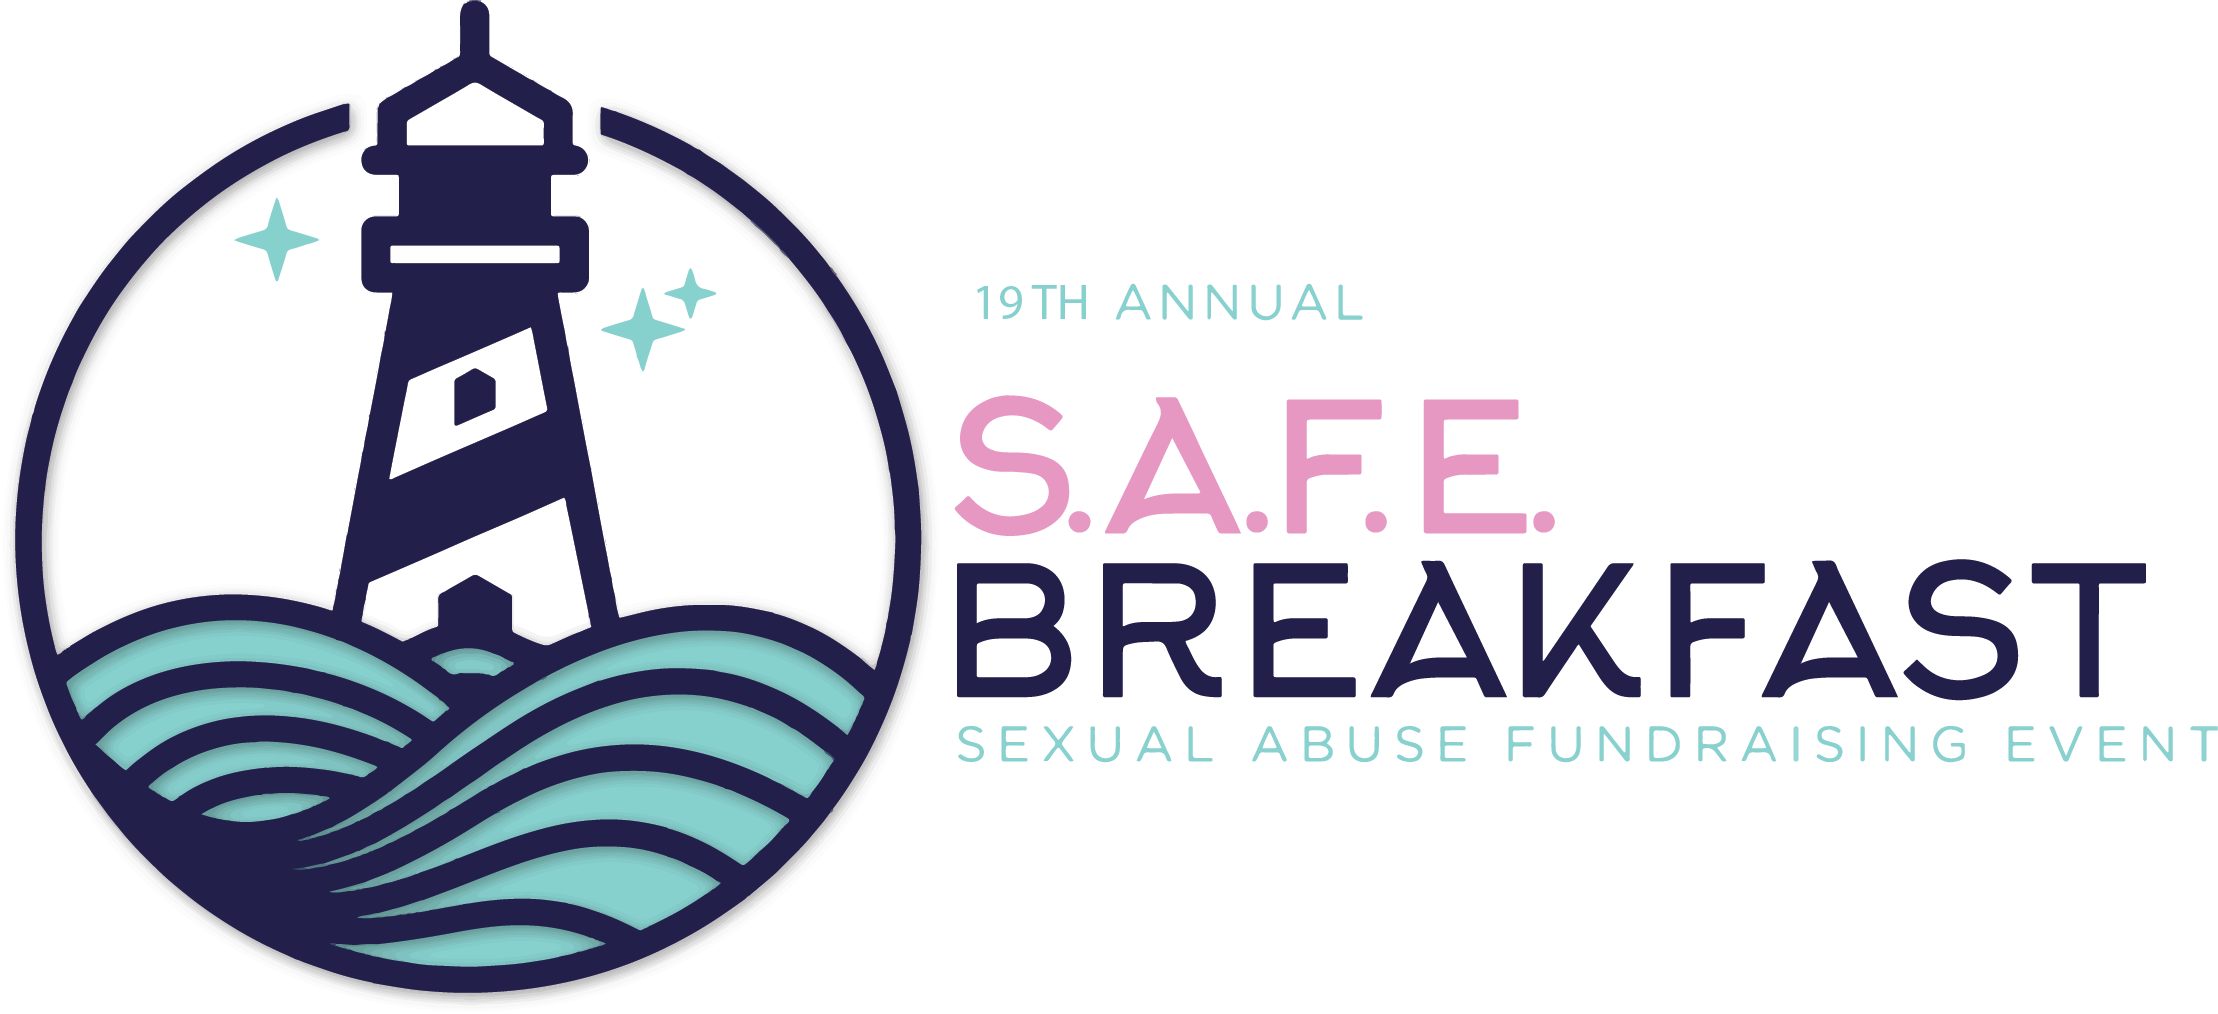 S.A.F.E. Breakfast Fundraiser logo